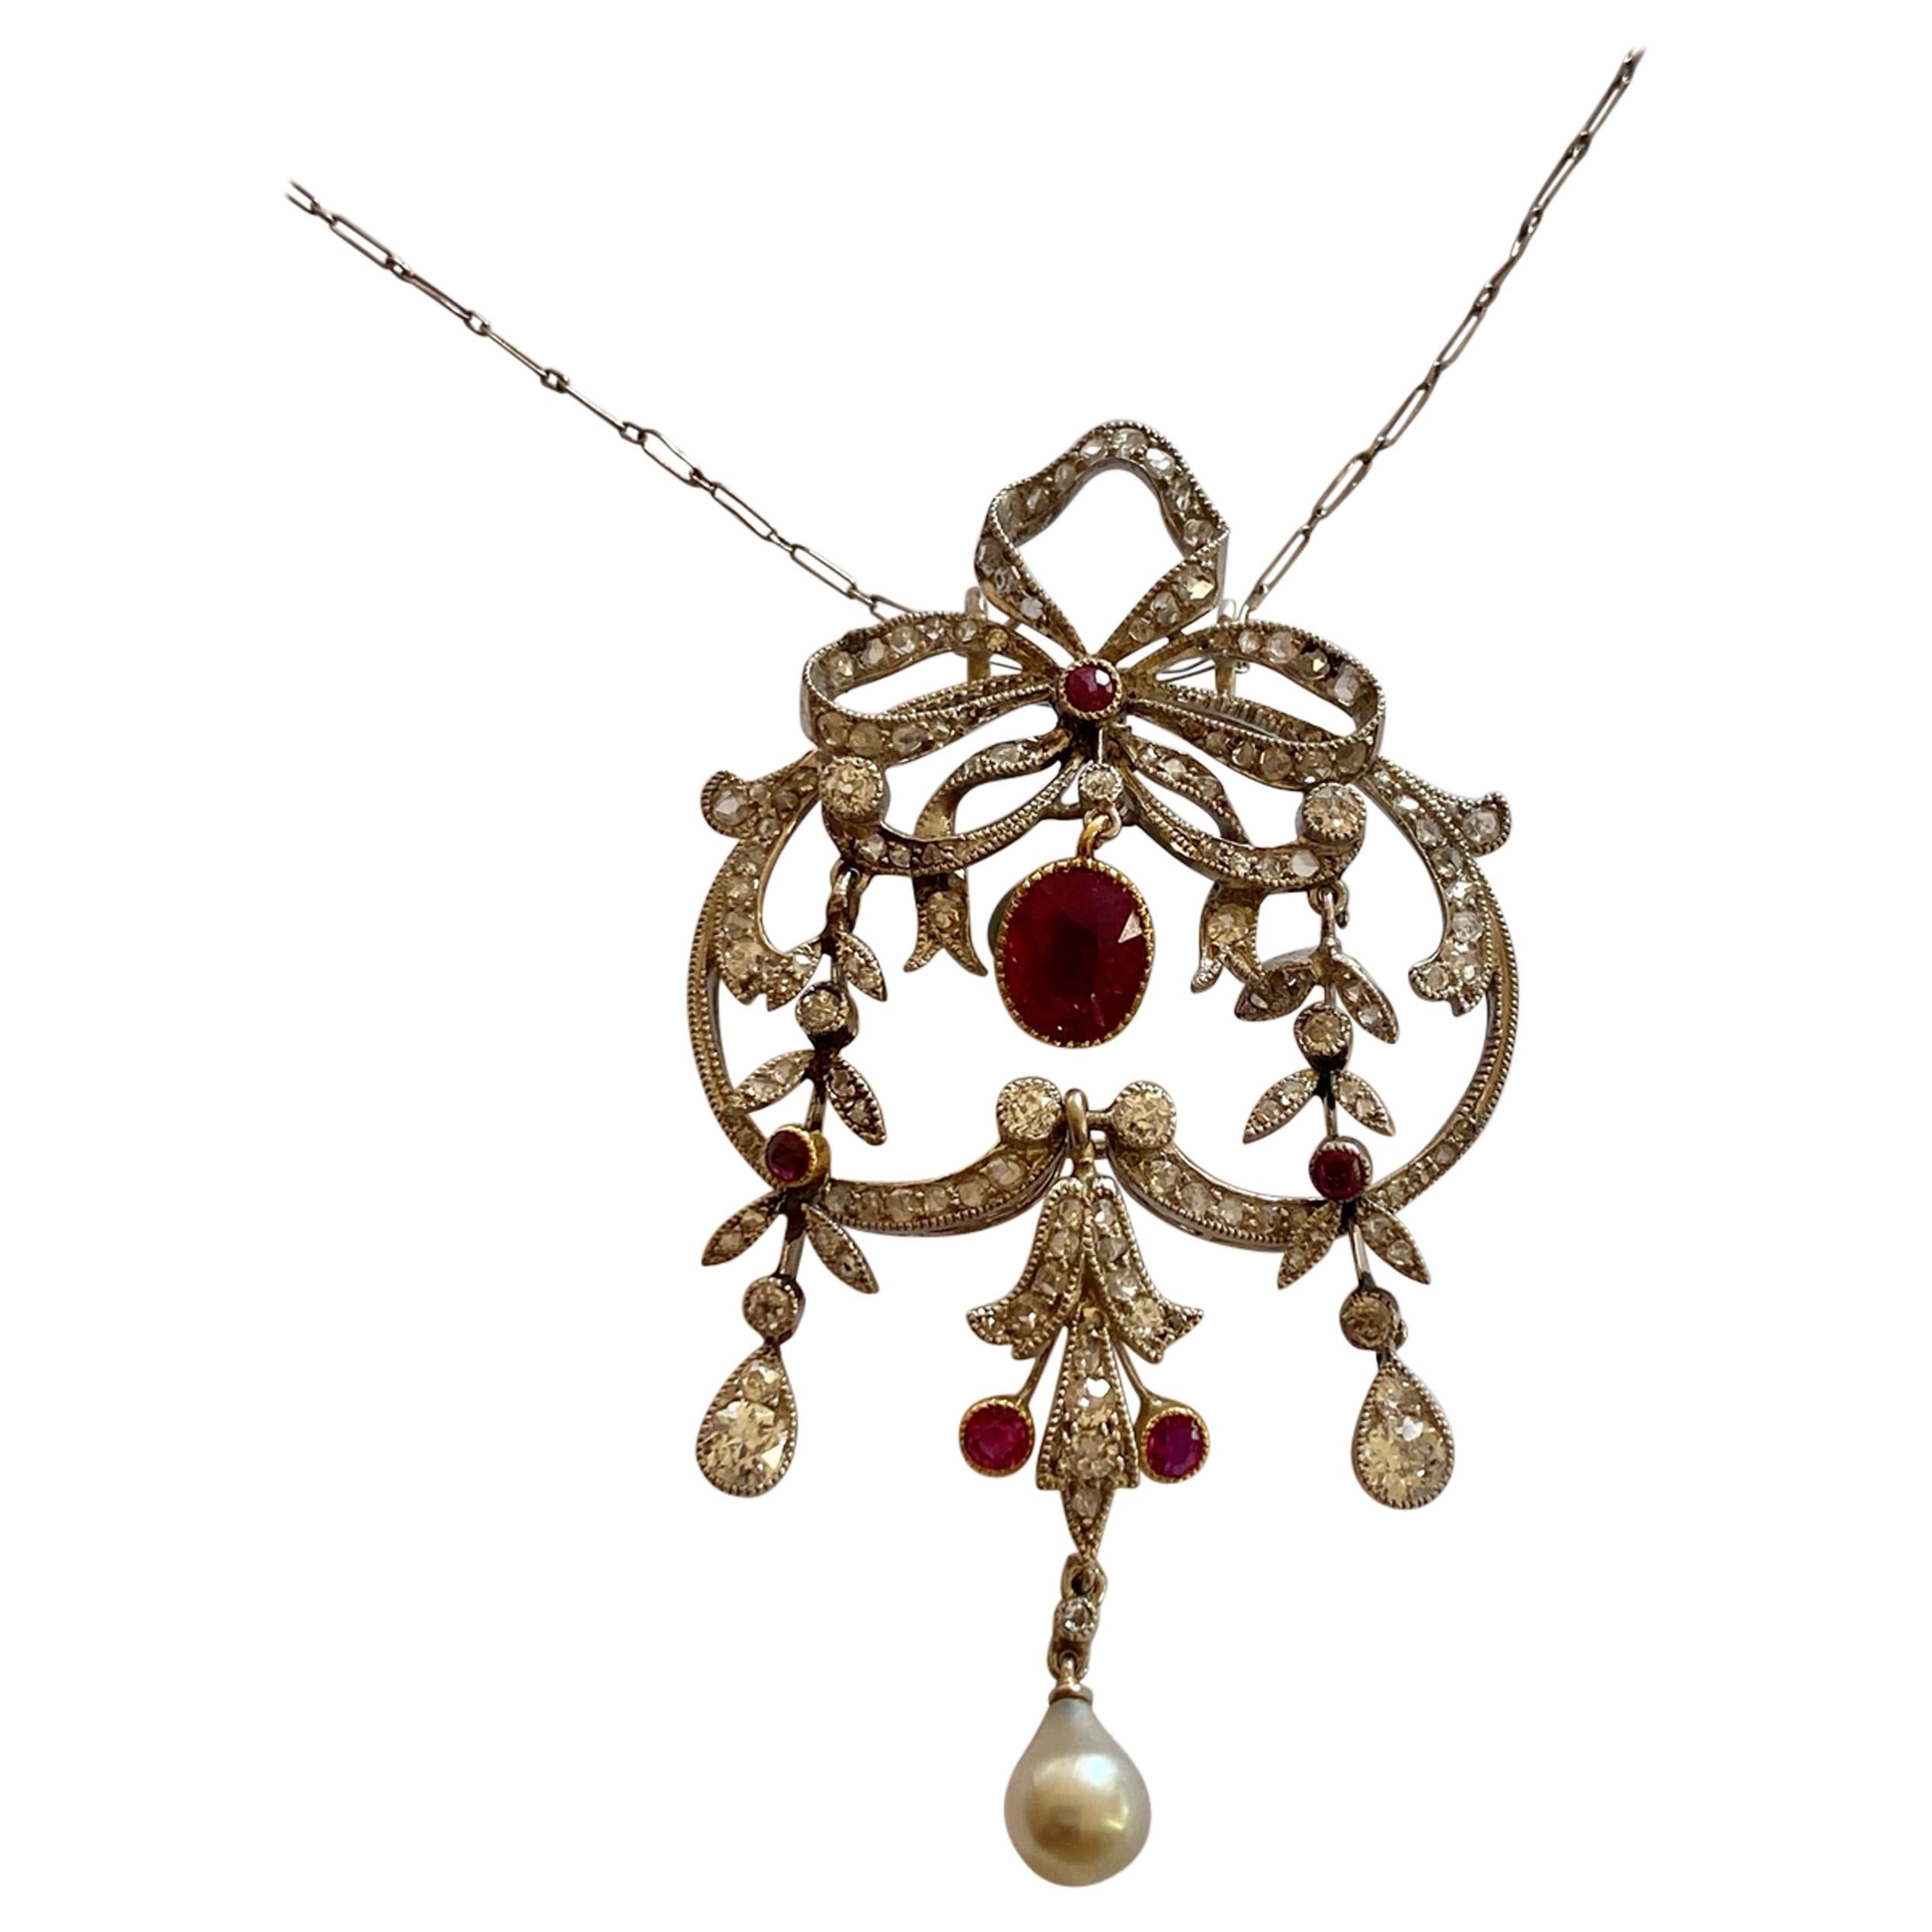 Edwardian Pendant with Chain / Brooch Platinum, Gold, Diamonds and Birma Ruby